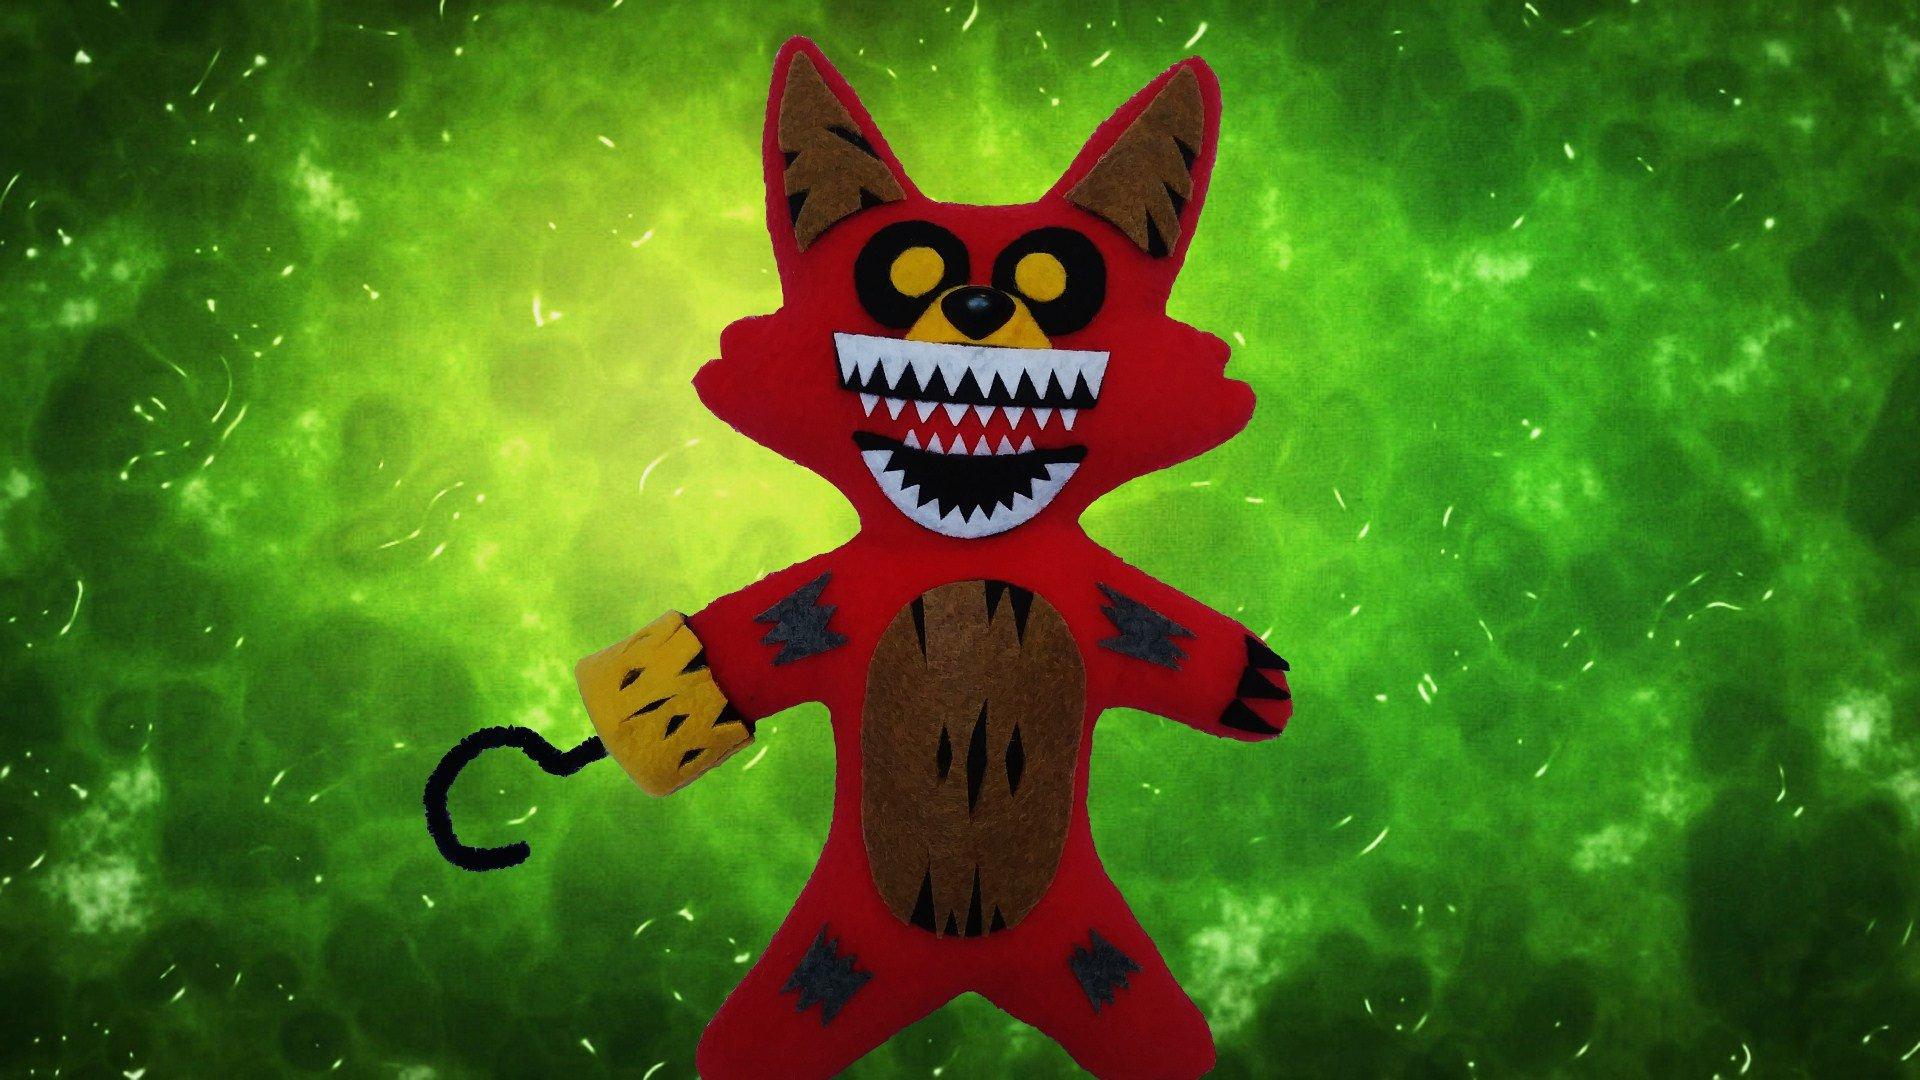 Fnaf Handmade PlushTwisted Foxy / Five Nights at Freddys